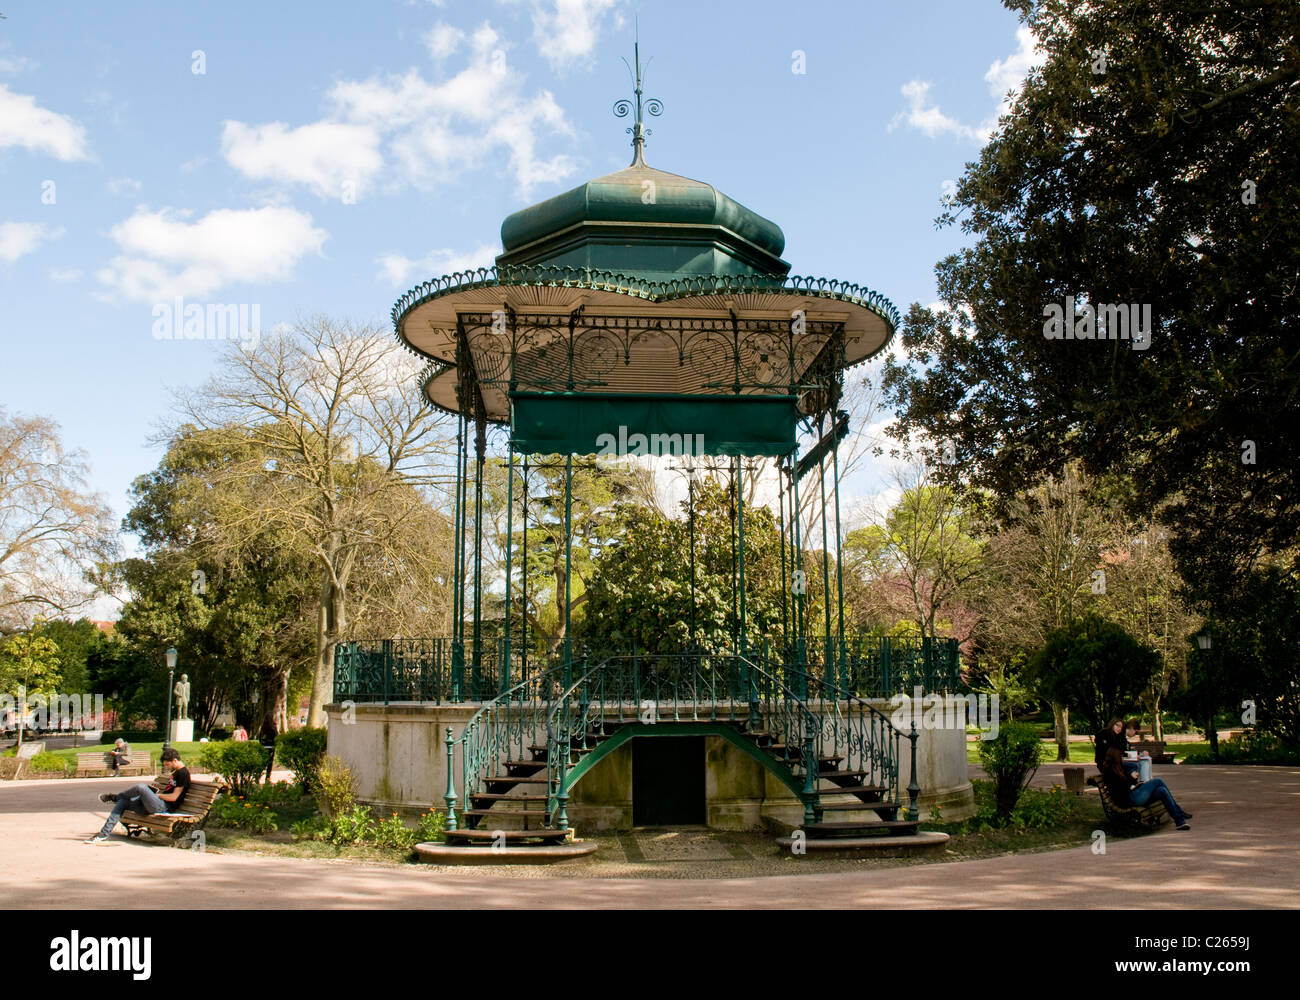 Ferro battuto bandstand risalente al tardo Novecento situato a Jardim da Estrela, Lisbona. Foto Stock